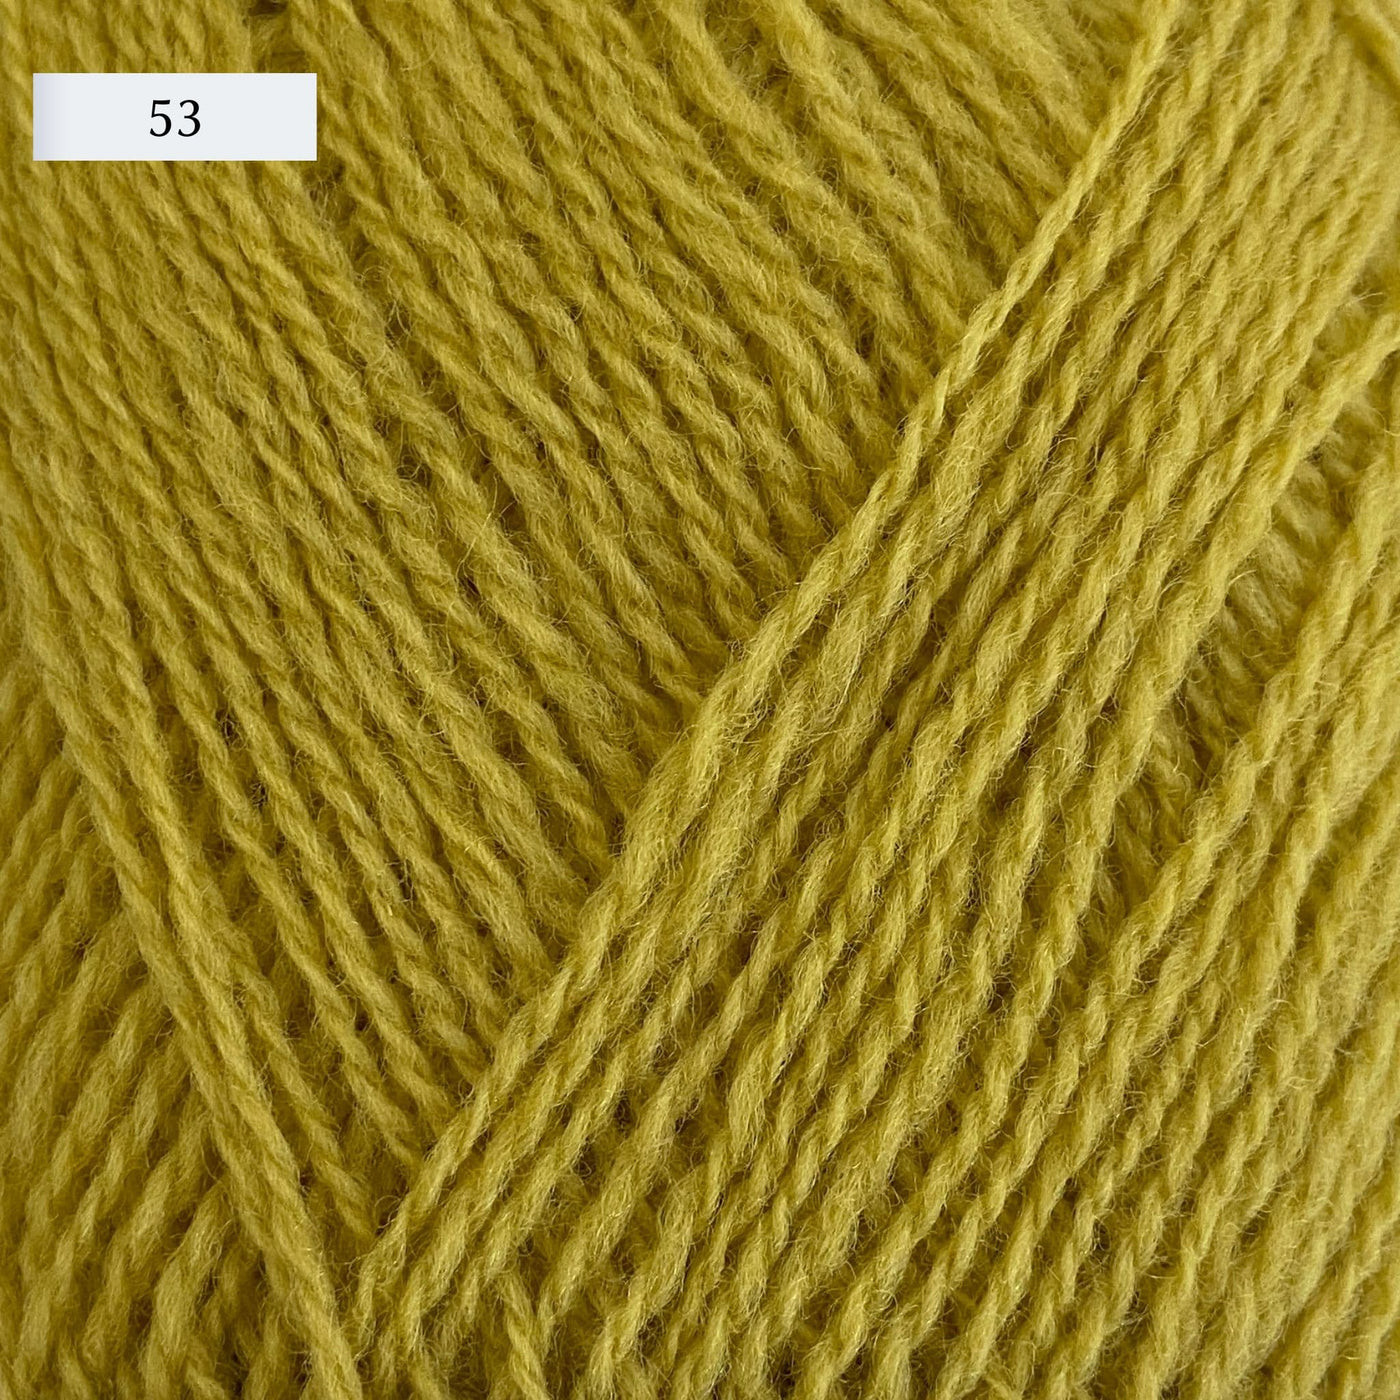 Rauma Lamullgarn, a fingering weight yarn, in color 53, a bright lemon yellow